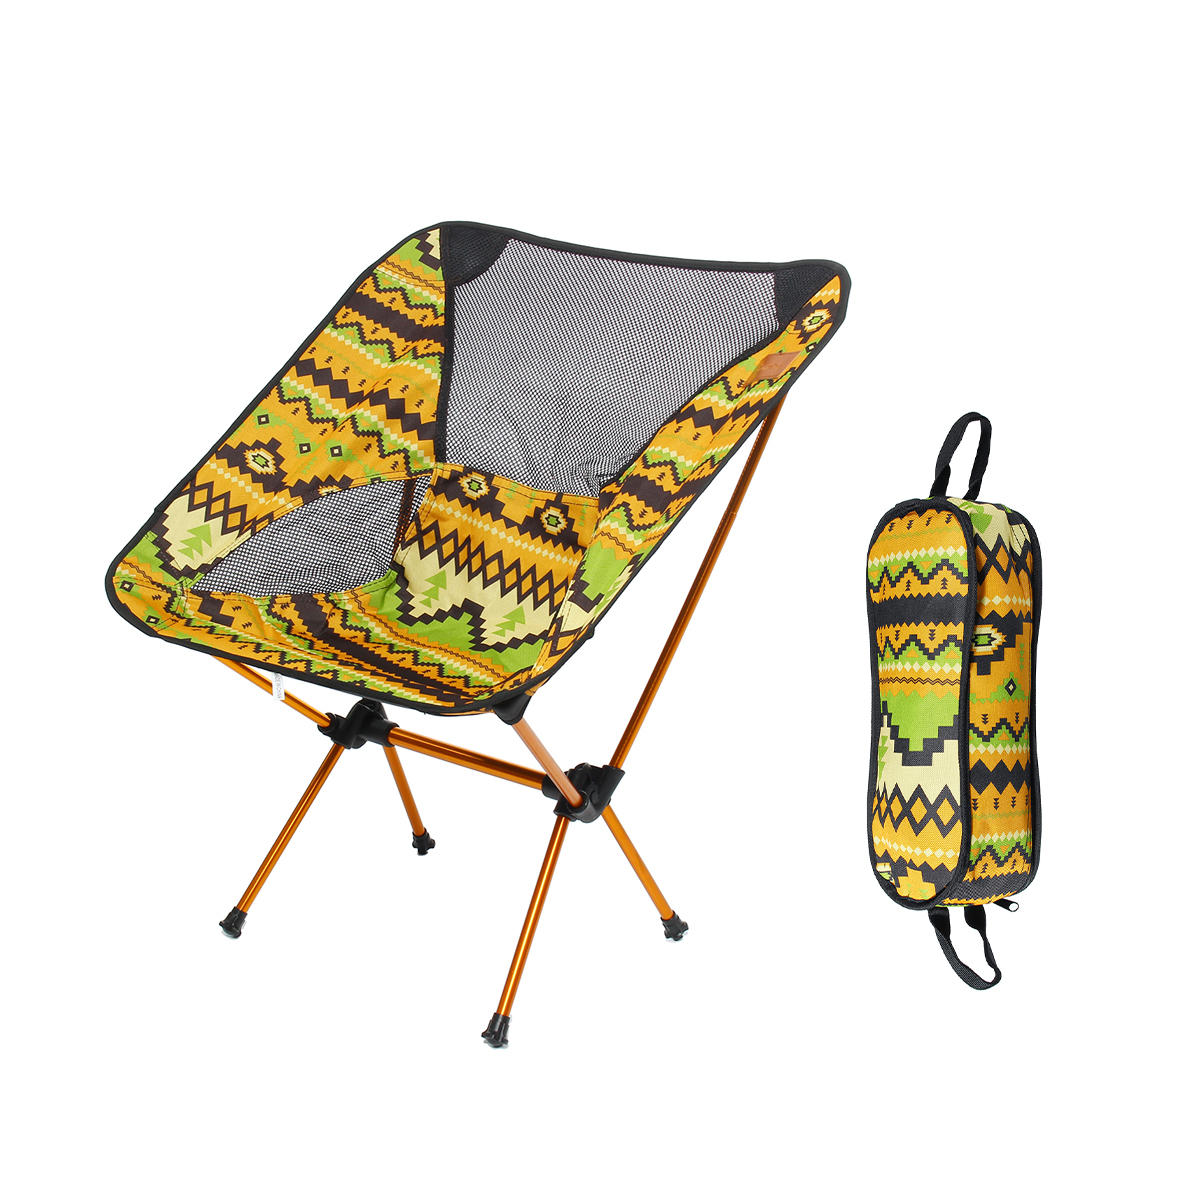 raagbare opvouwbare stoel van aluminiumlegering voor barbecue en camping, maximale belasting 150 kg.